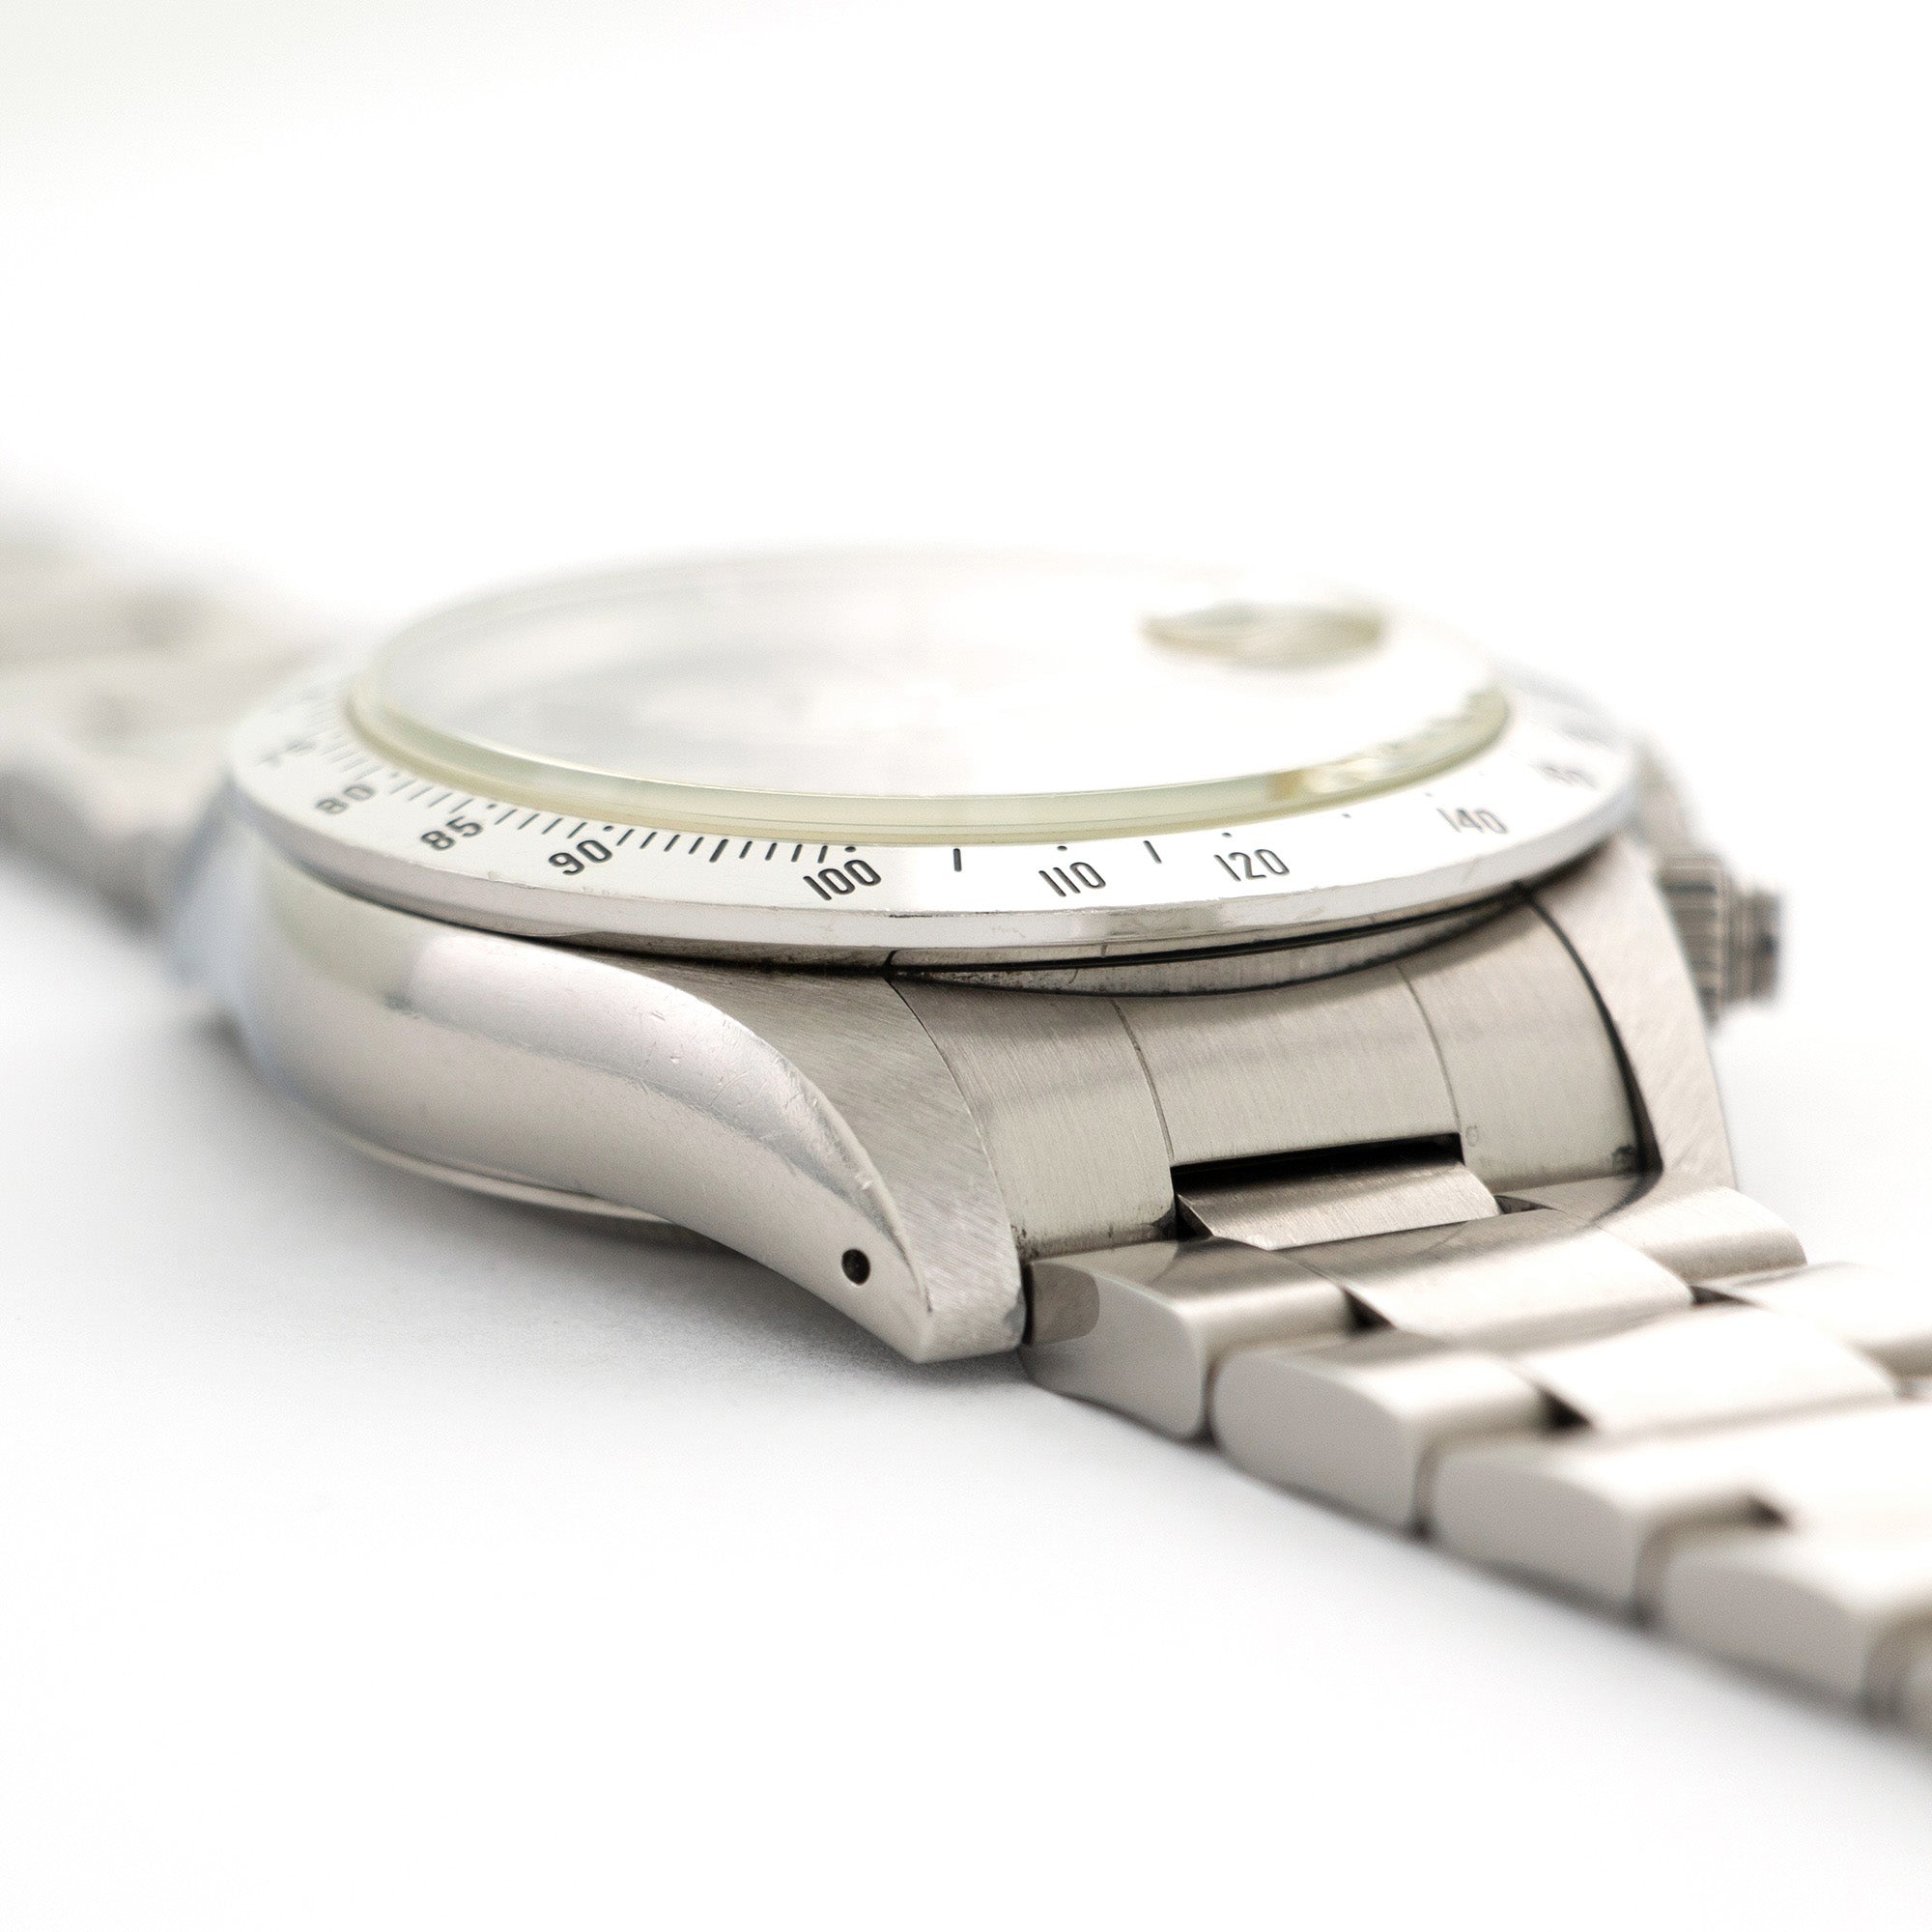 Tudor - Tudor Steel Chrono-Time Watch Ref. 79280 with Original Warranty Paper - The Keystone Watches